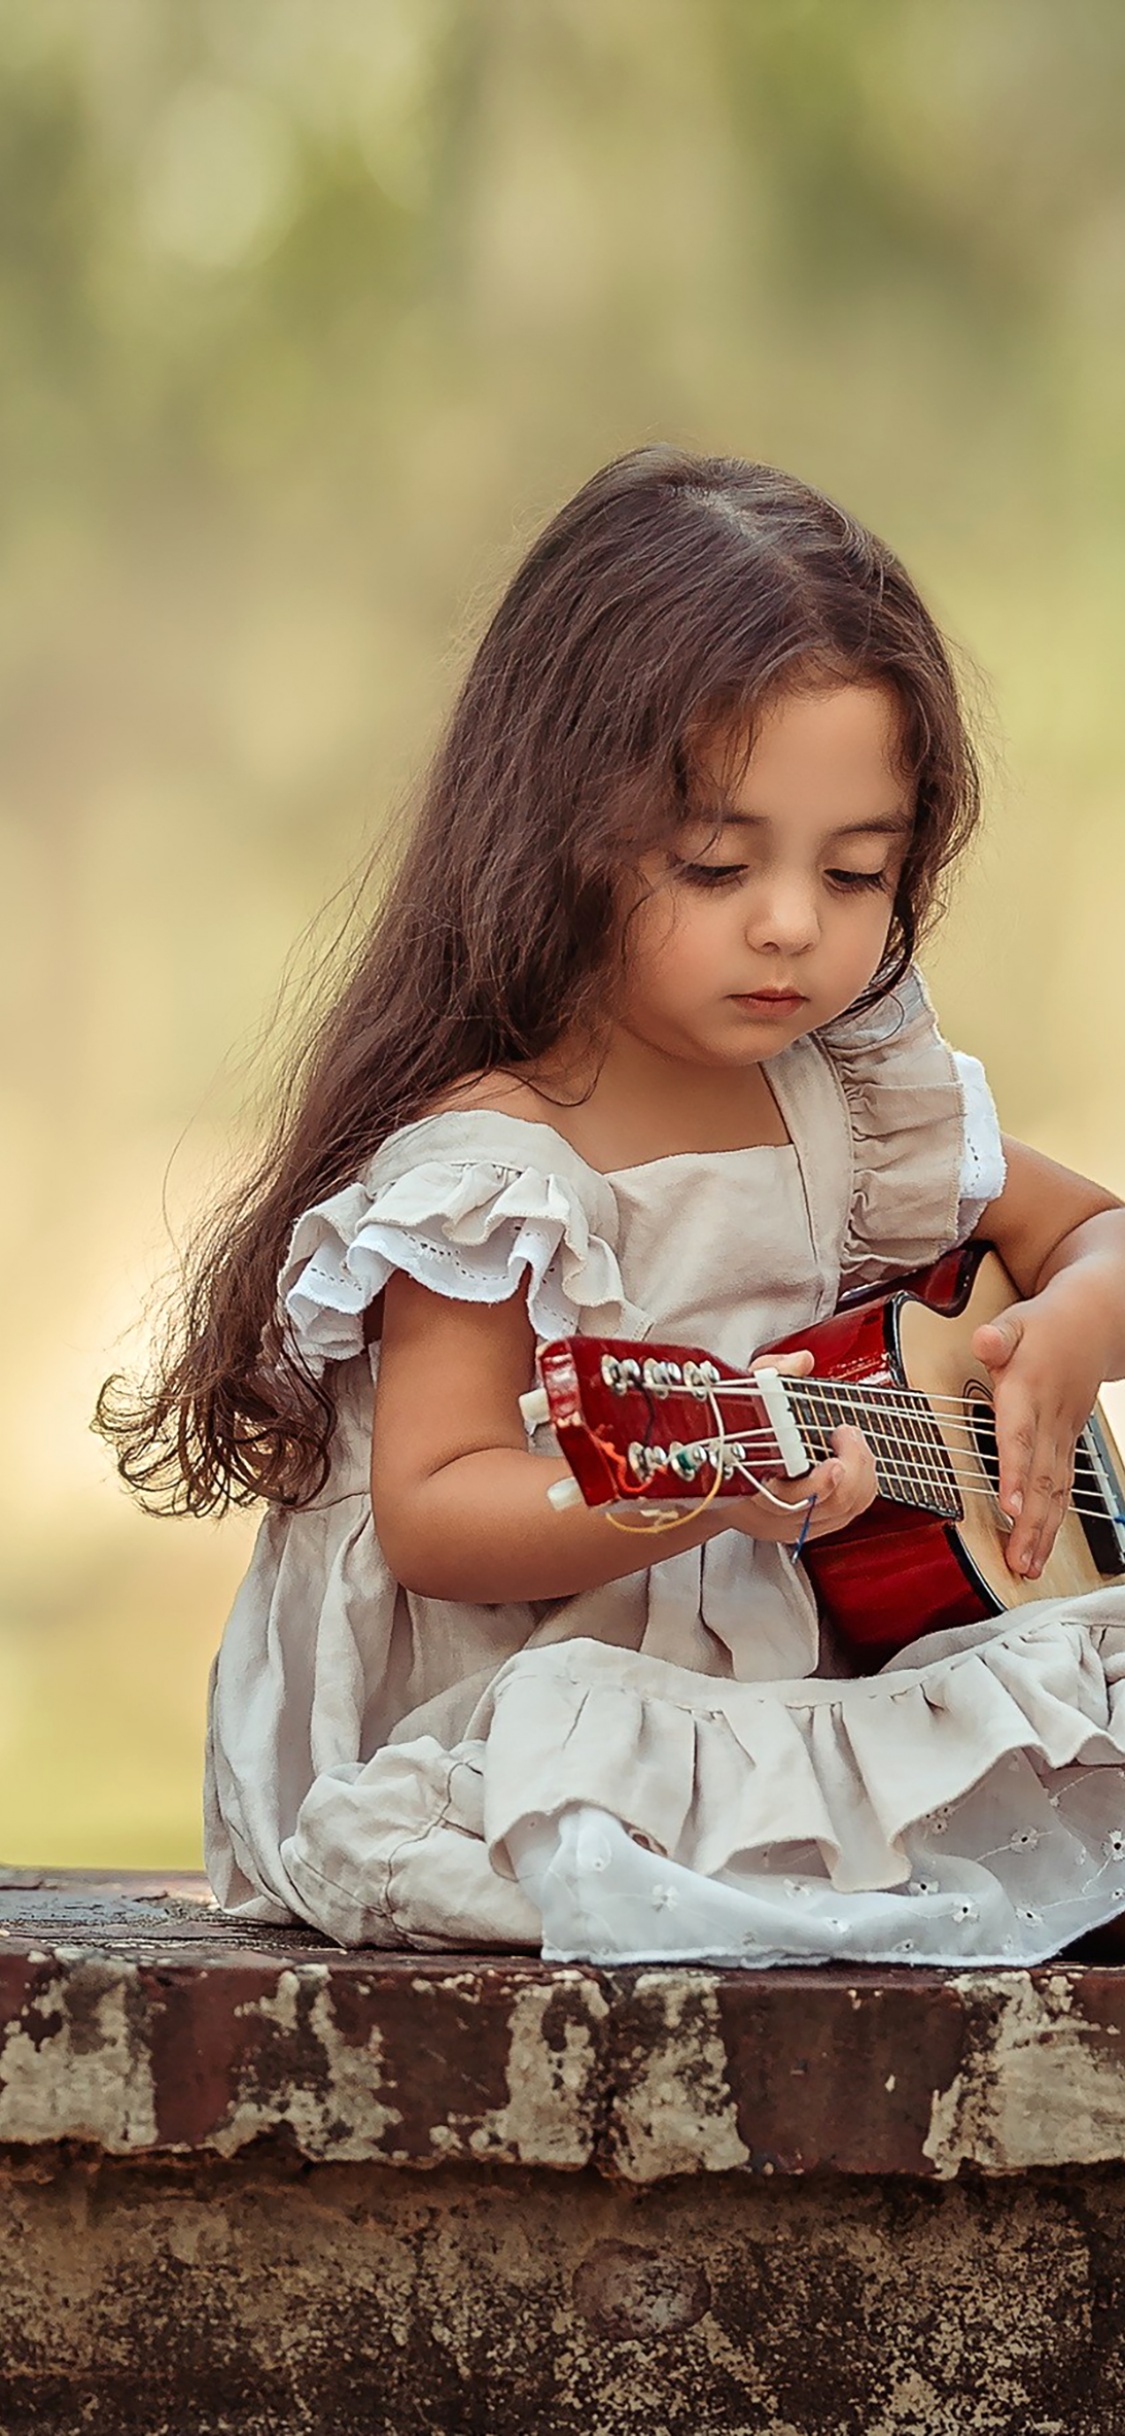 Cute girl Wallpaper 4K, Playing guitar, Adorable, Kid, Child, Cute, #278